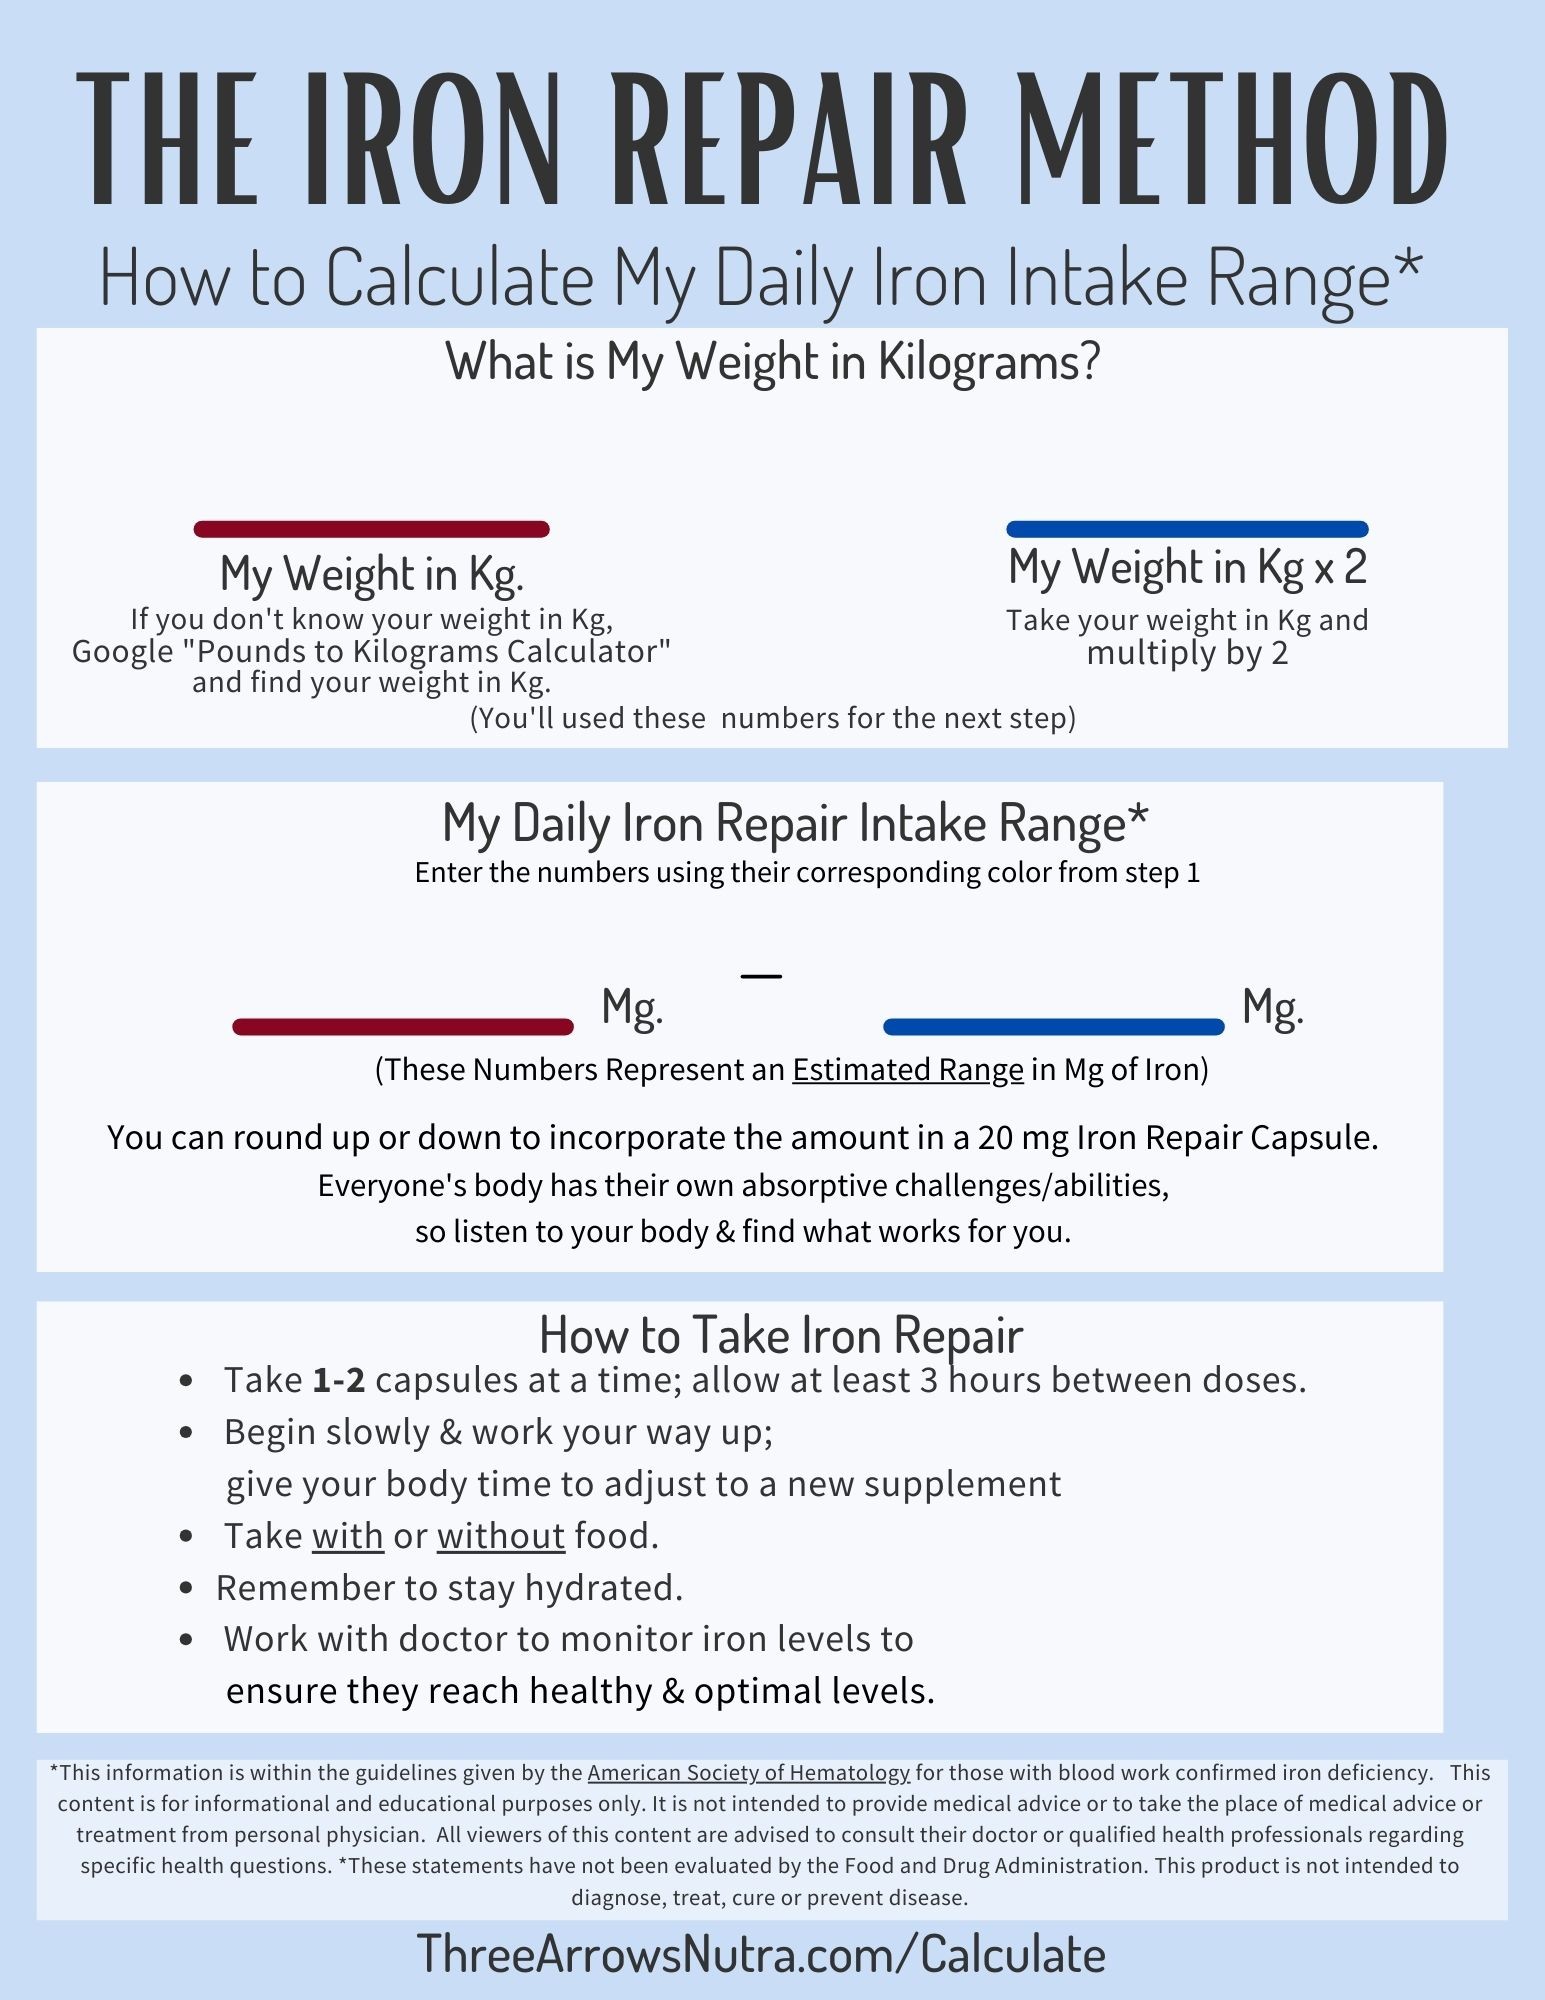 How Much Iron Repair Should I take? How to take heme iron